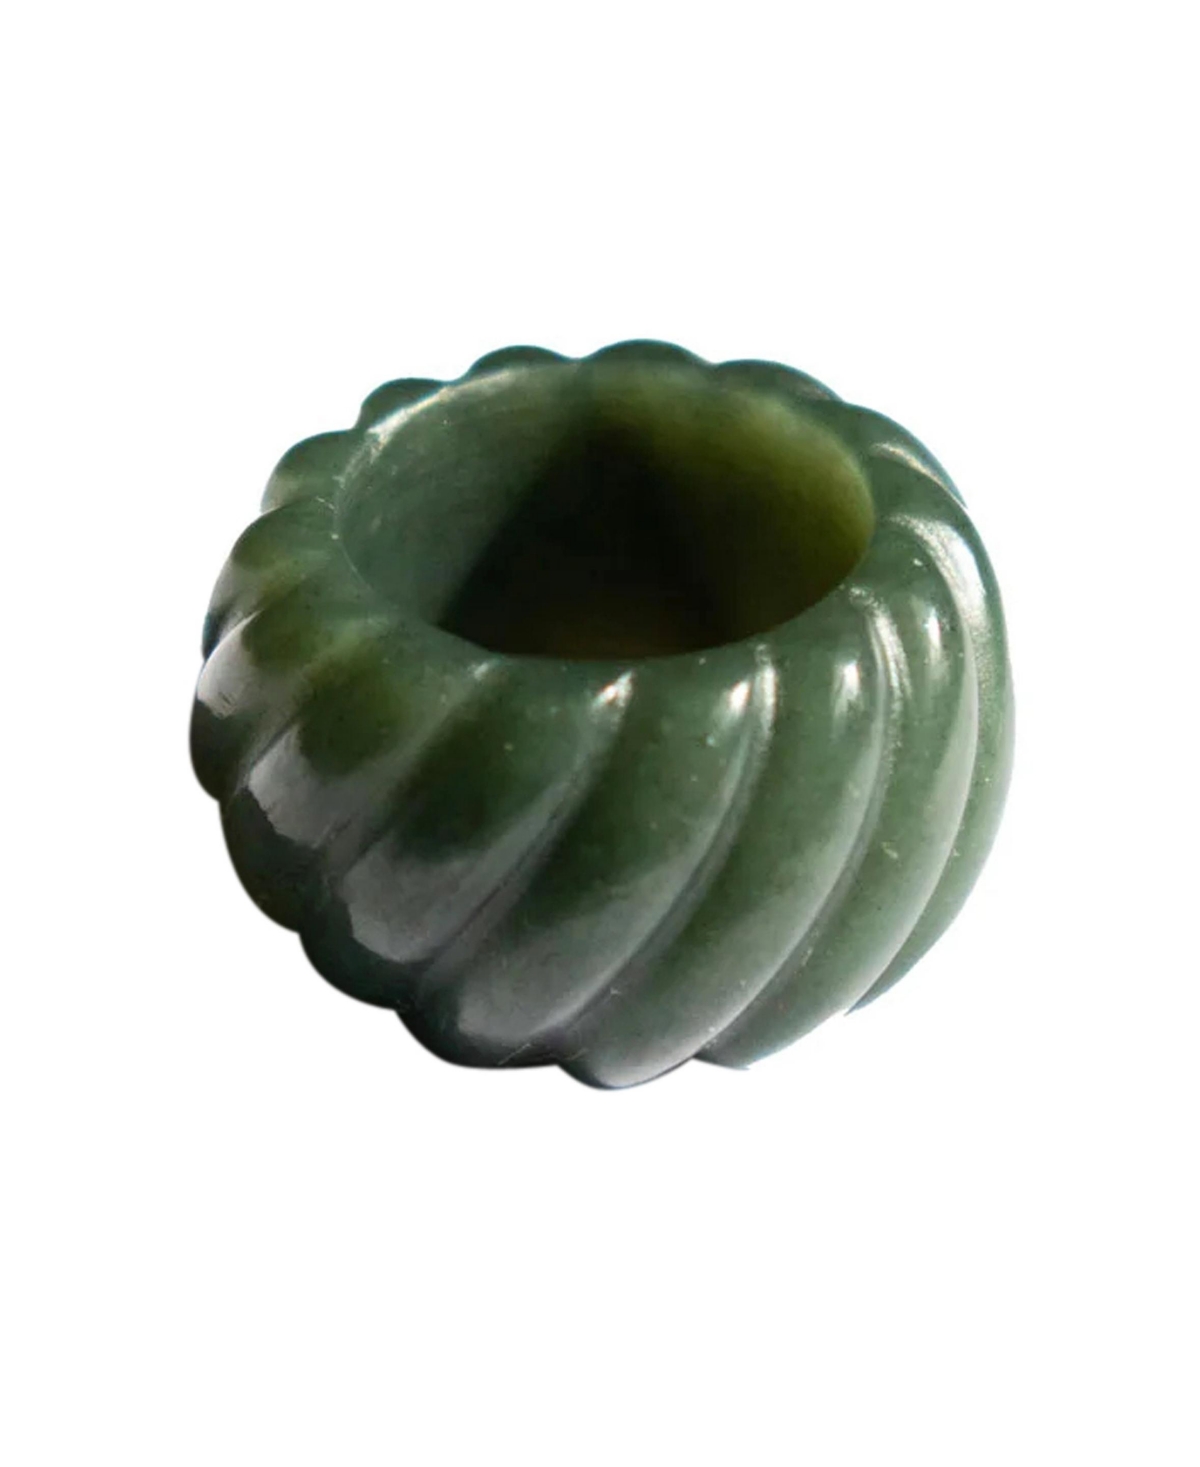 Croissant - Green jade twist ring - Green